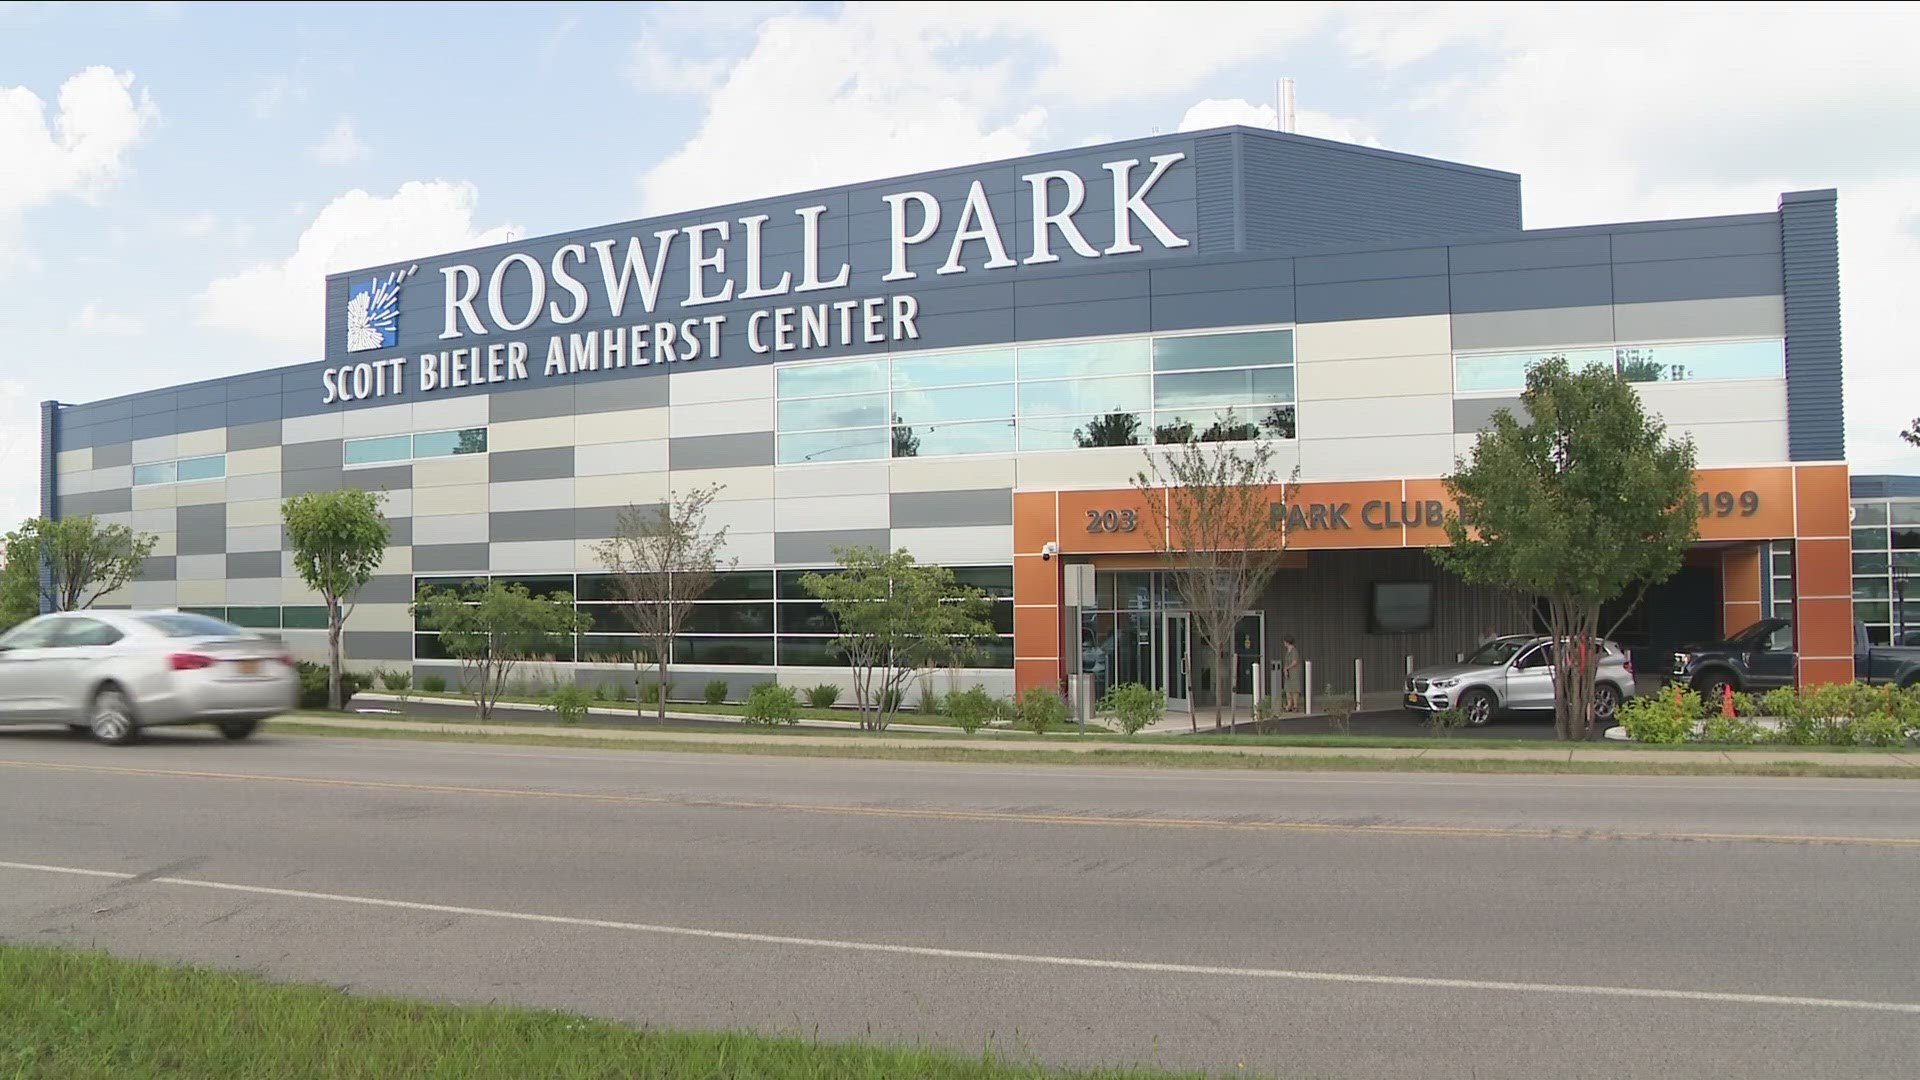 'Roswell Park Scott Bieler Amherst Center' officially opens